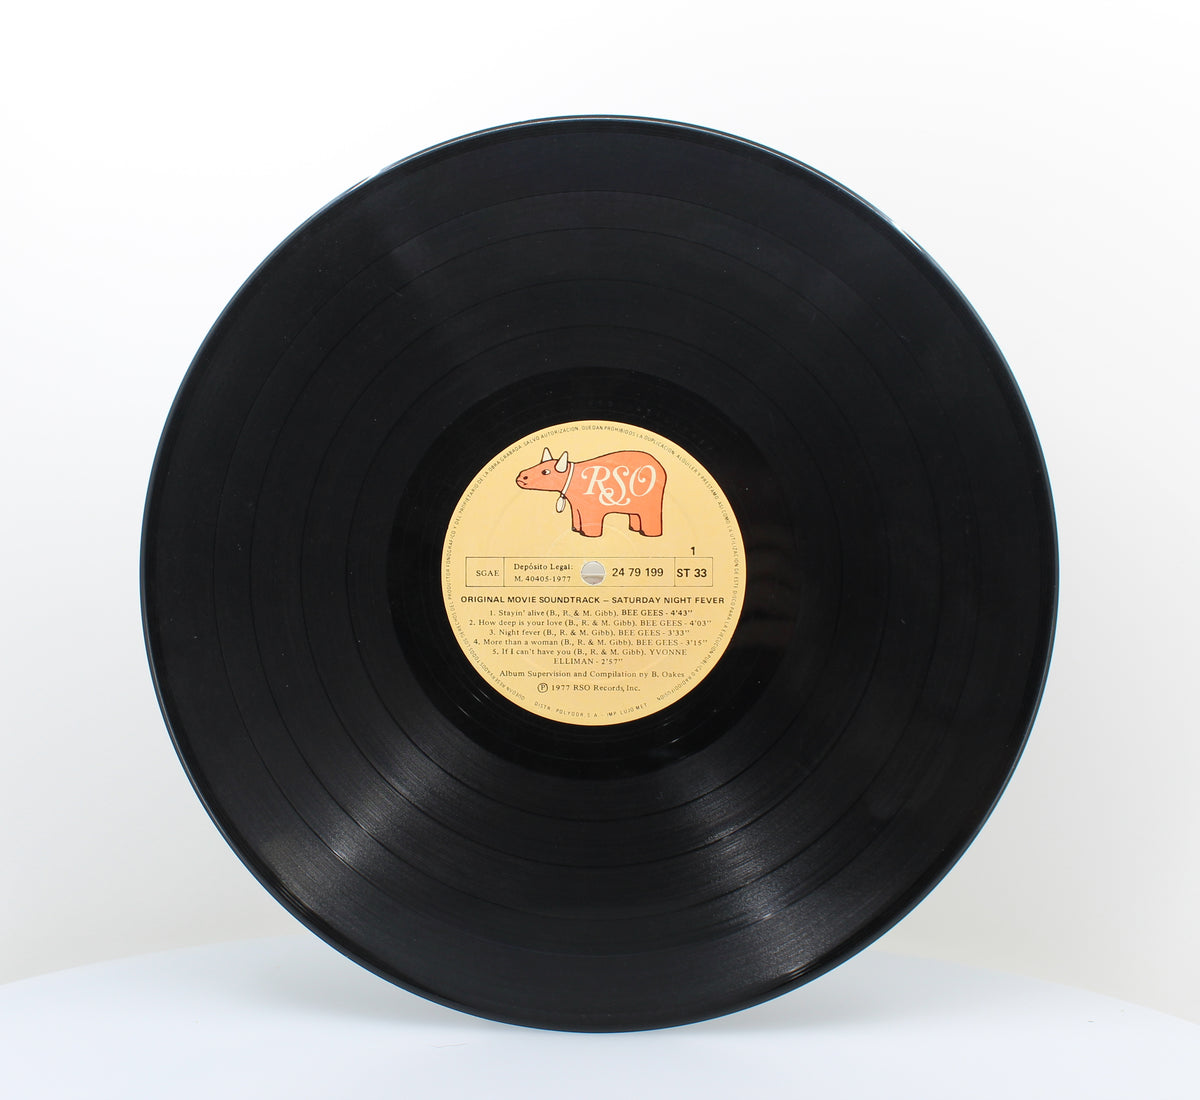 Bee Gees - Saturday Night Fever, 2 x Vinyl, LP, Album, Spain 1977